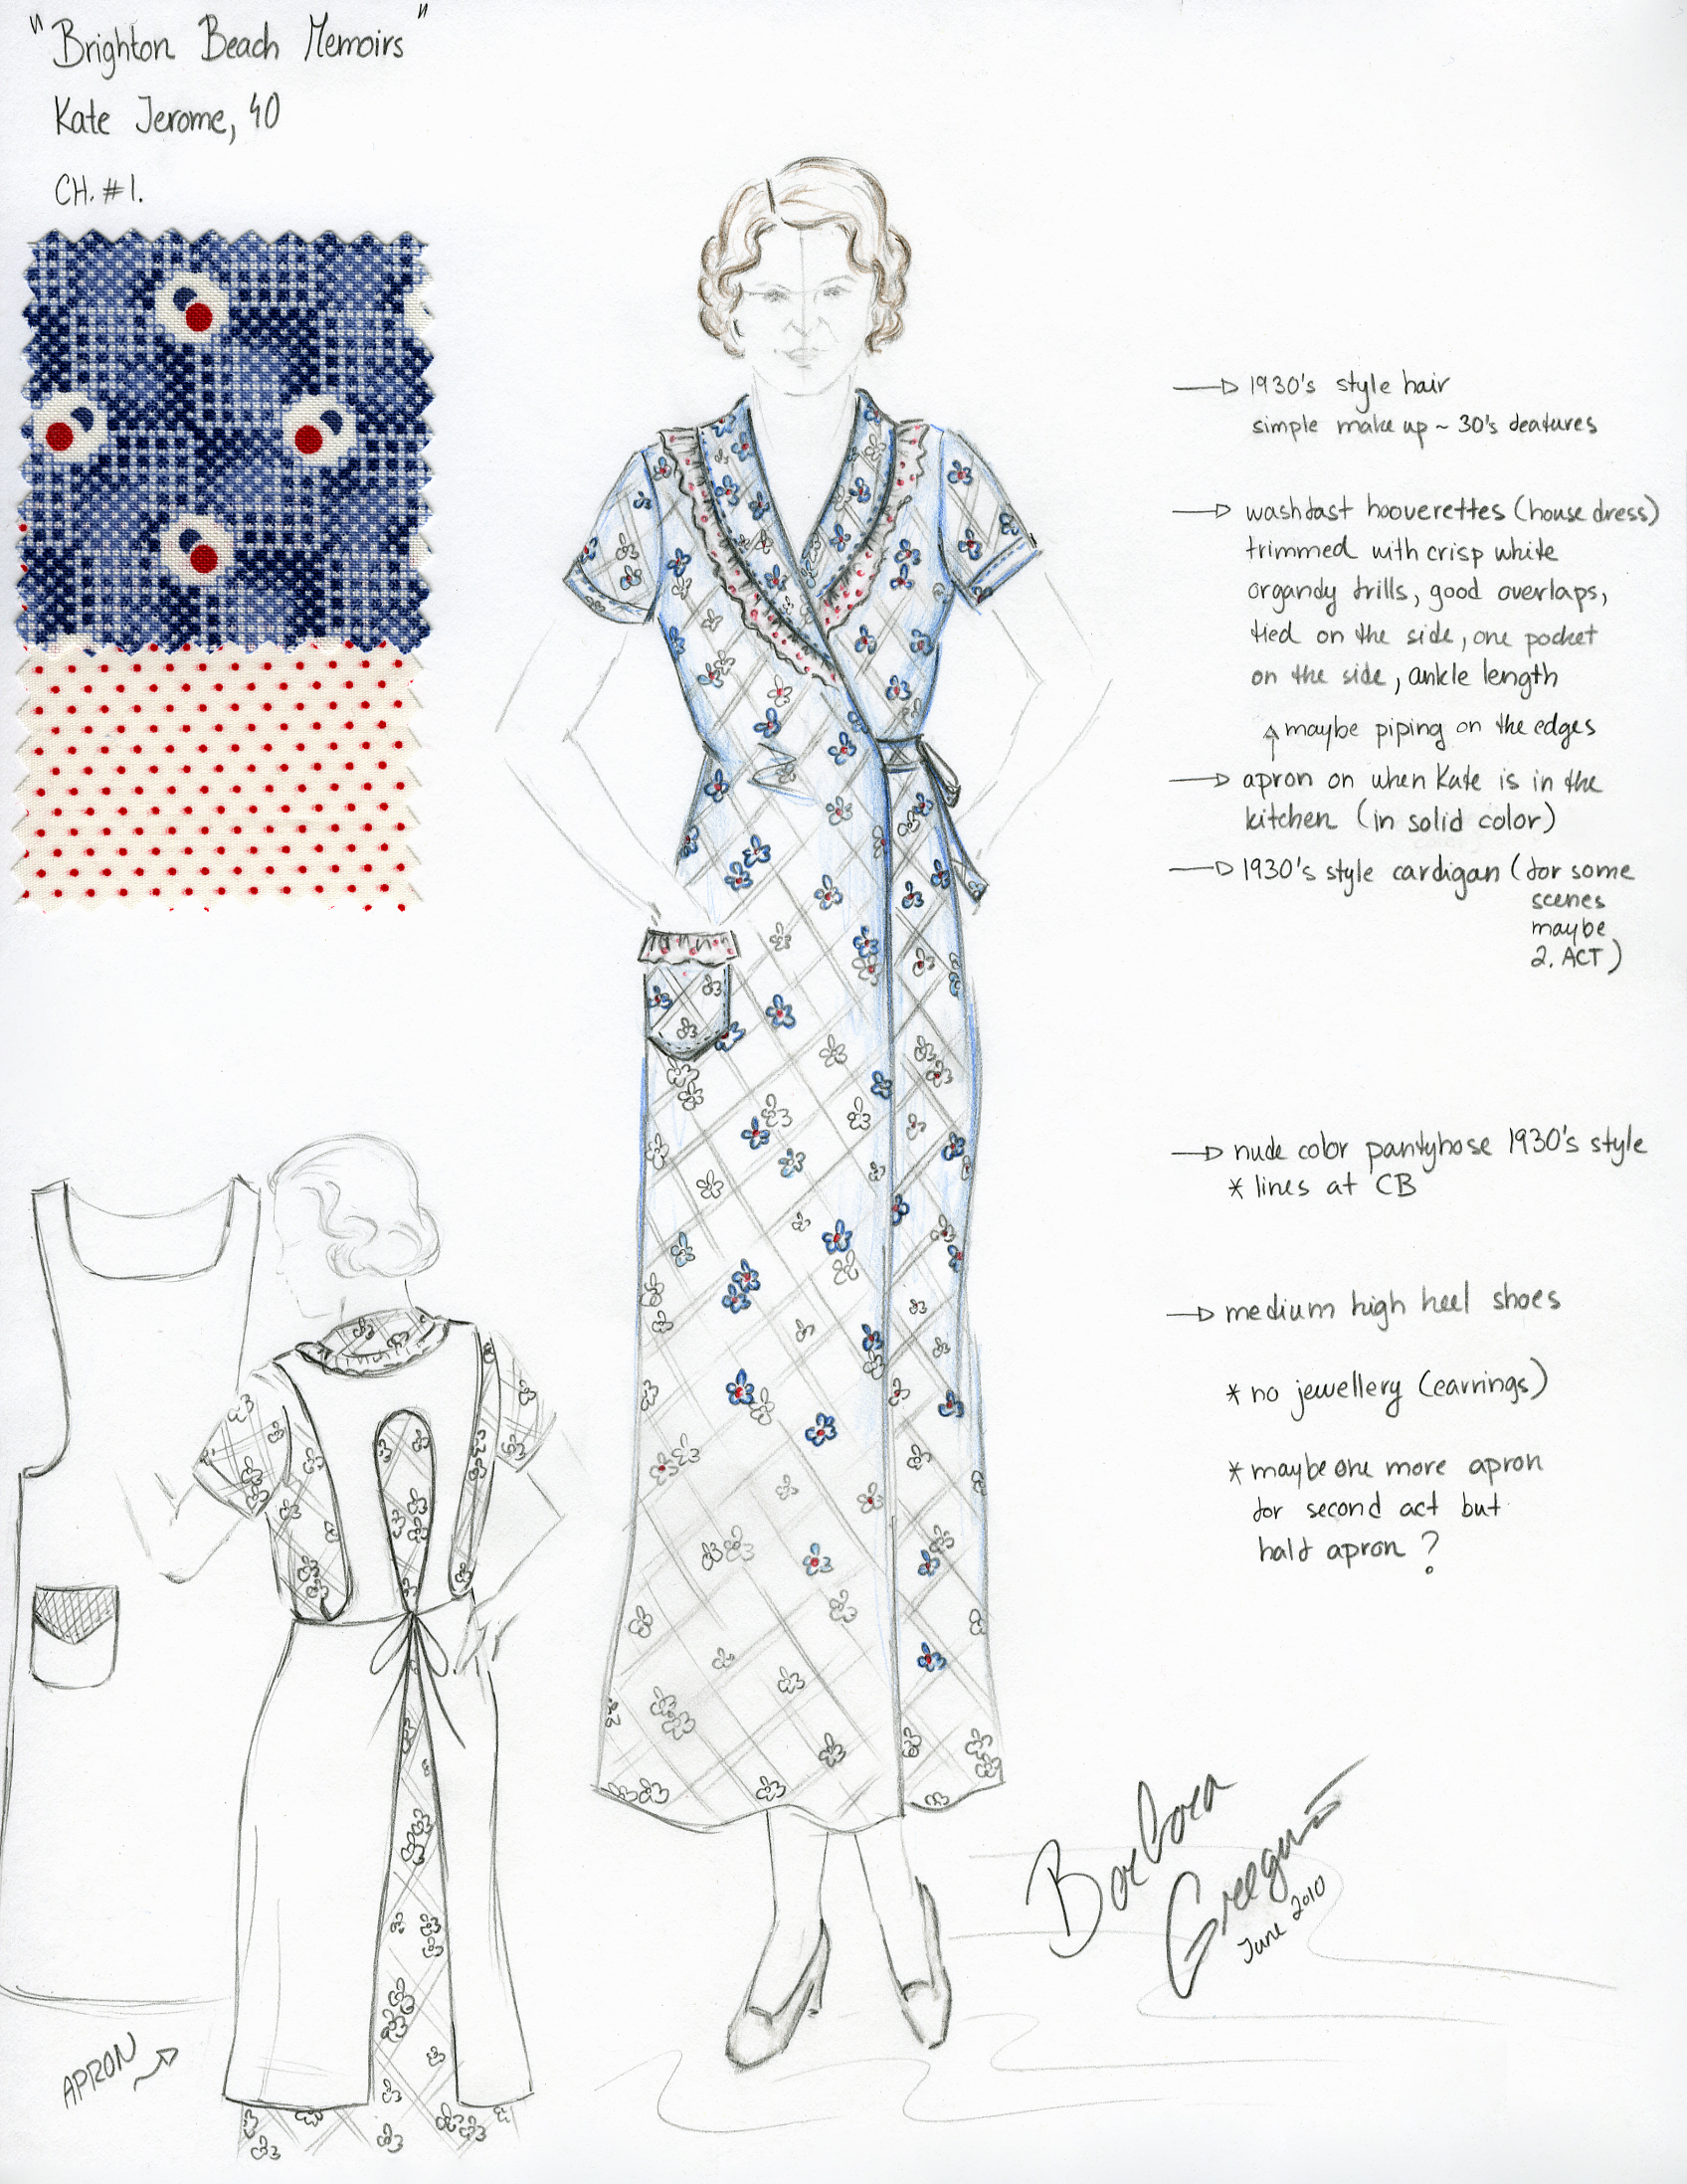 Costume Design Sketch for Kate in 